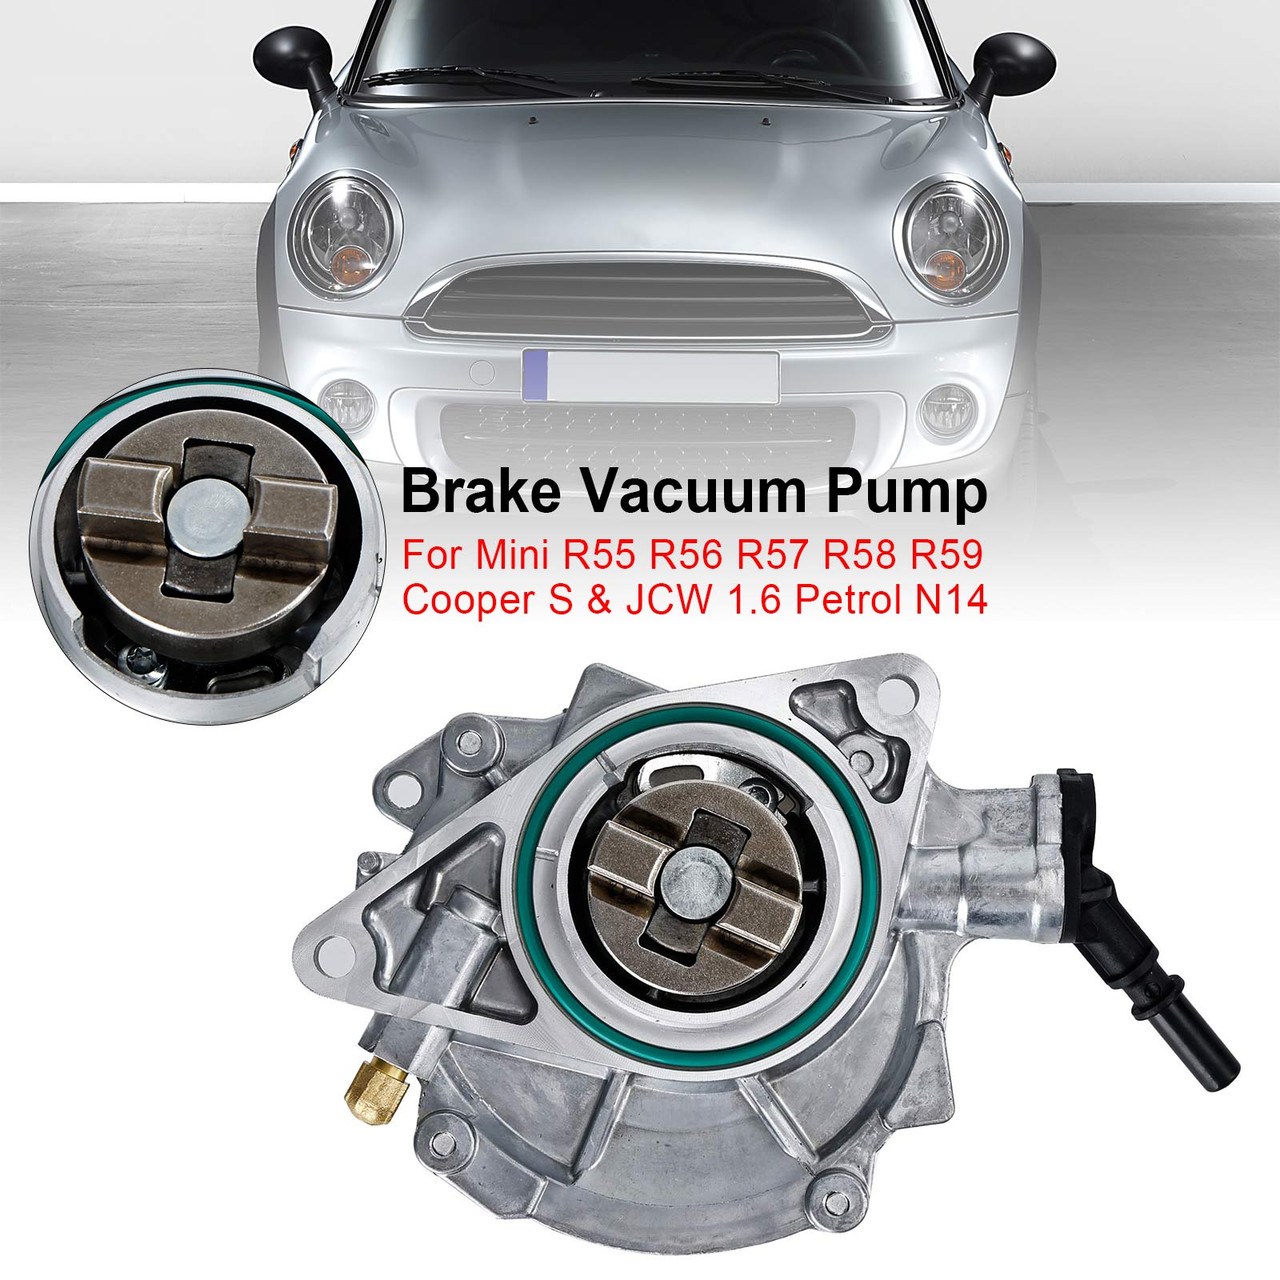 Brake Vacuum Pump 11667556919 For Mini R55 R56 R57 R58 R59 Cooper S & JCW 1.6 Petrol N14